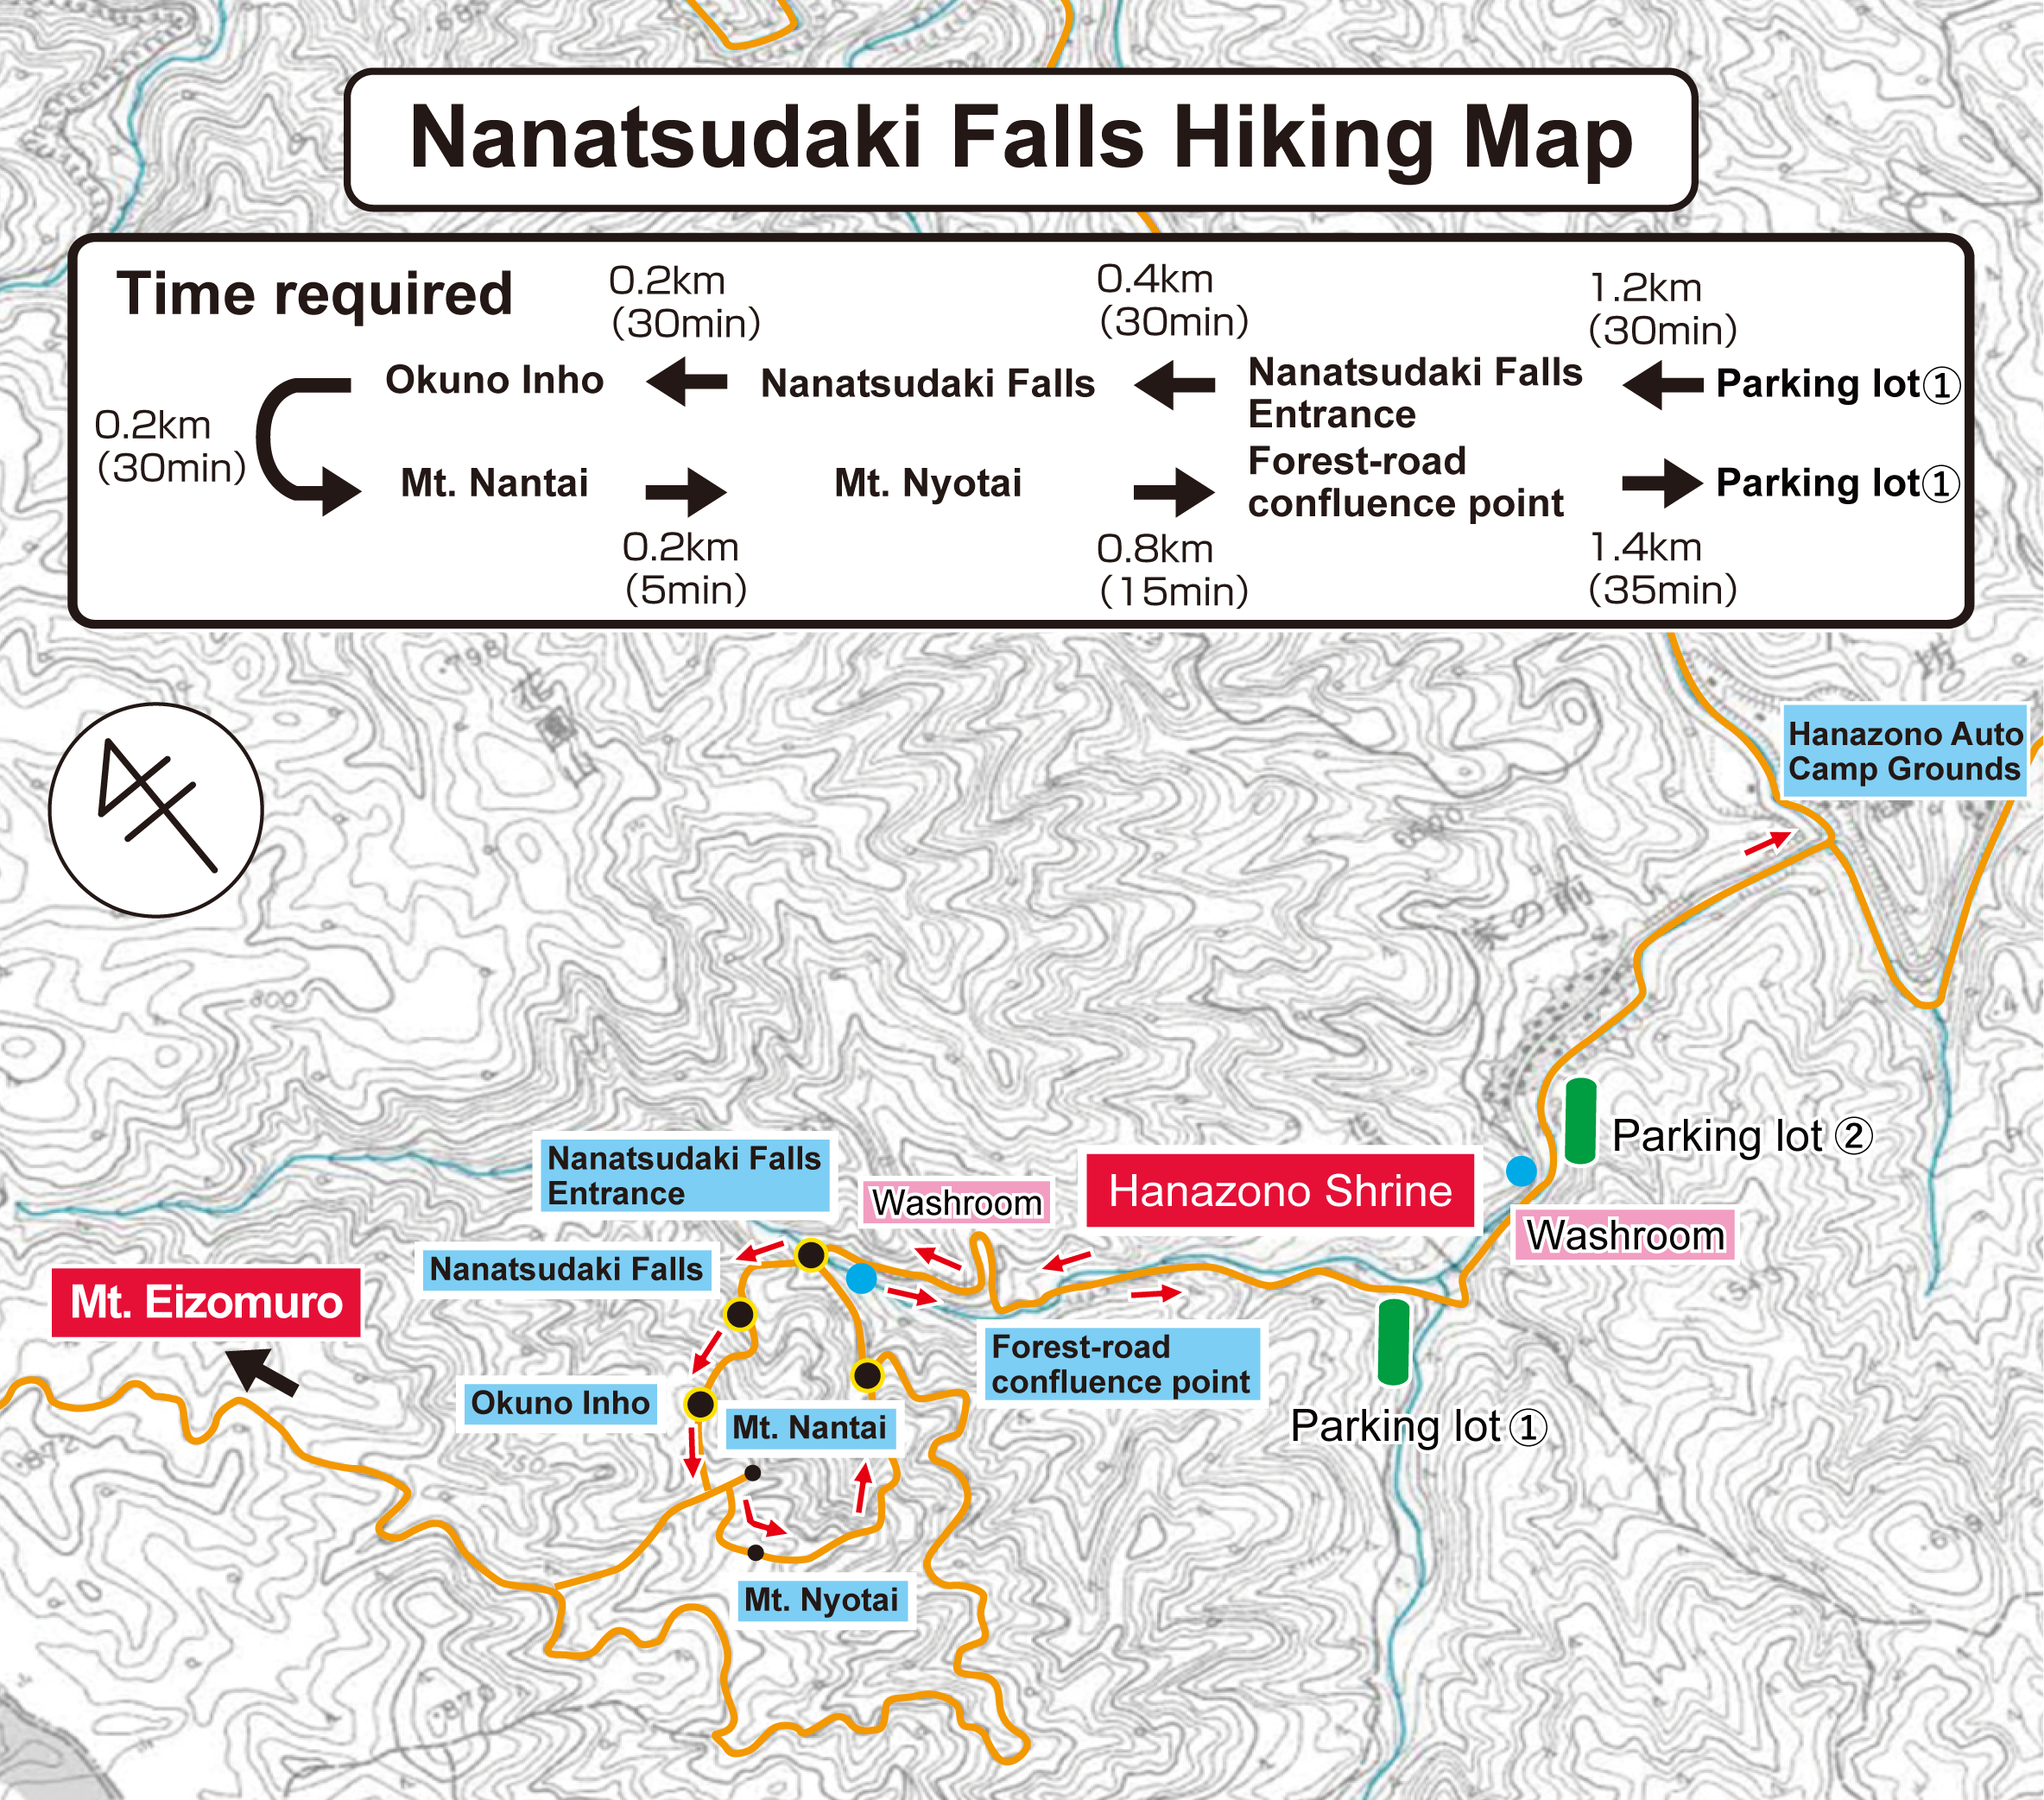 『『You can hike from the parking lot here at Hanazono Shrine to the Nanatsudaki Falls.』の画像』の画像